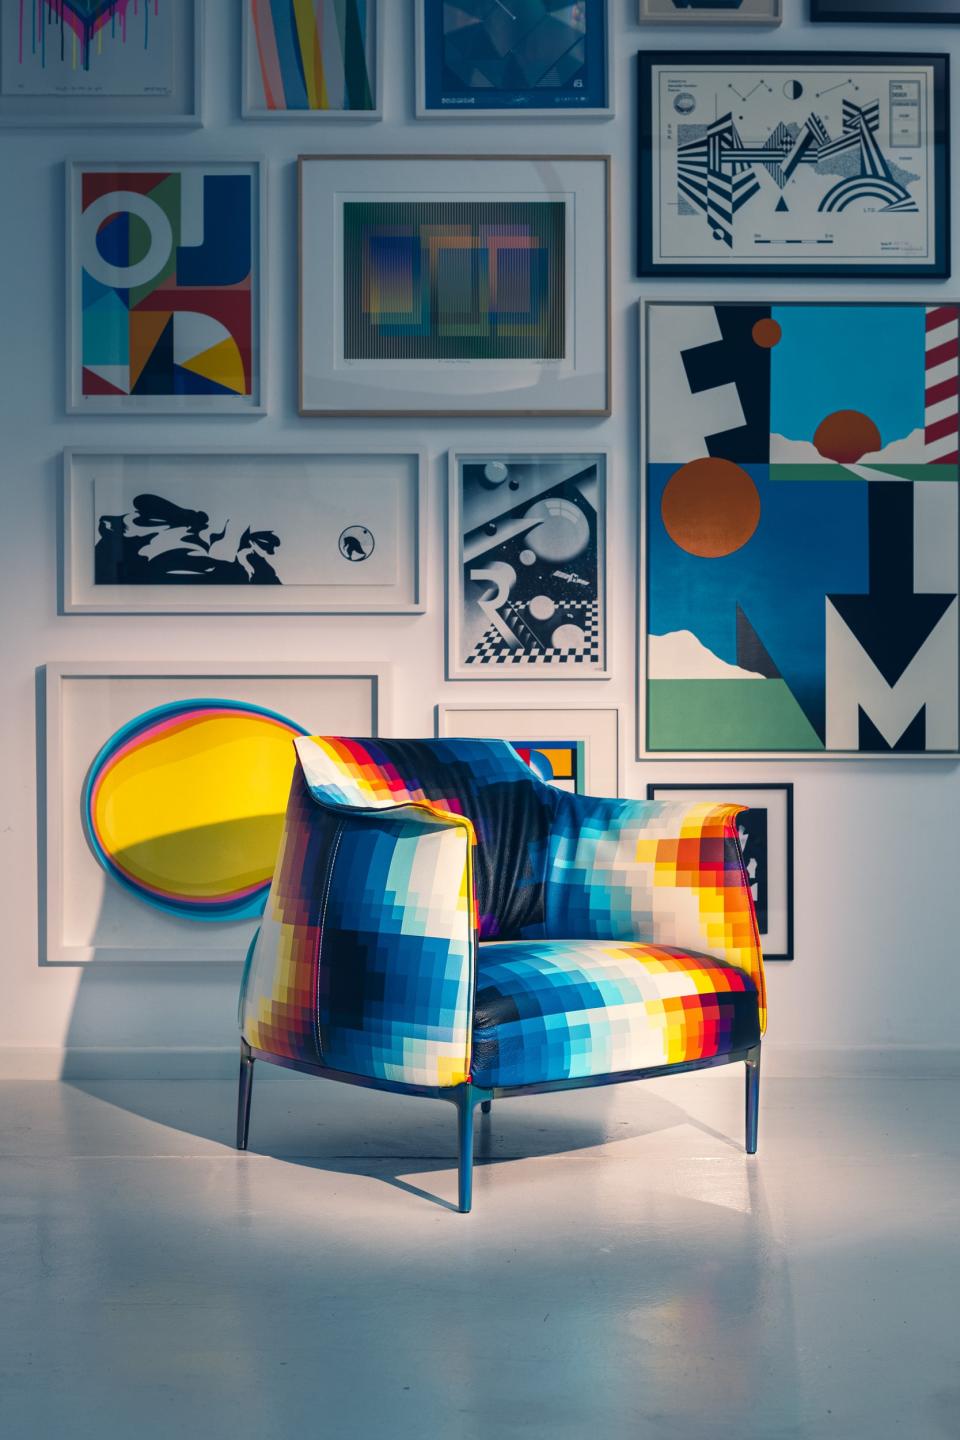 Poltrona Frau’s limited-edition Archibald armchair reinterpreted by Felipe Pantone. - Credit: Courtesy of Poltrona Frau